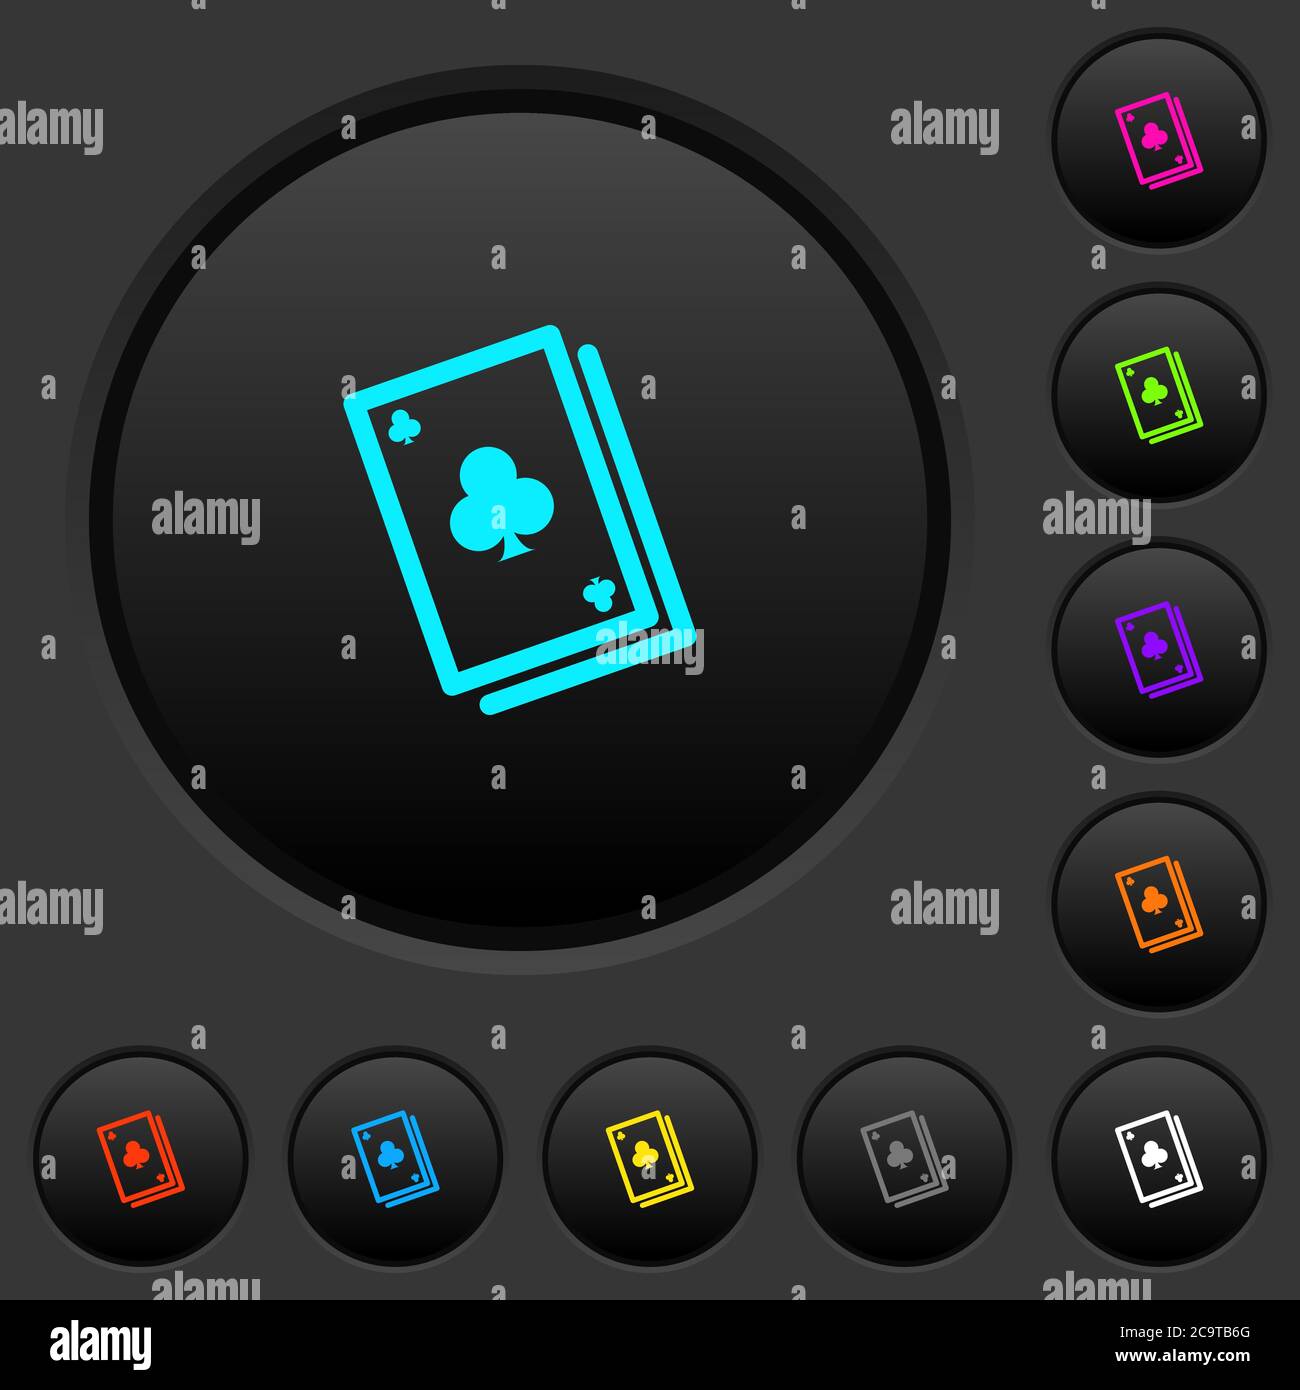 TIC tac toe juego botones pulsadores oscuros con iconos de colores vivos  sobre fondo gris oscuro Imagen Vector de stock - Alamy